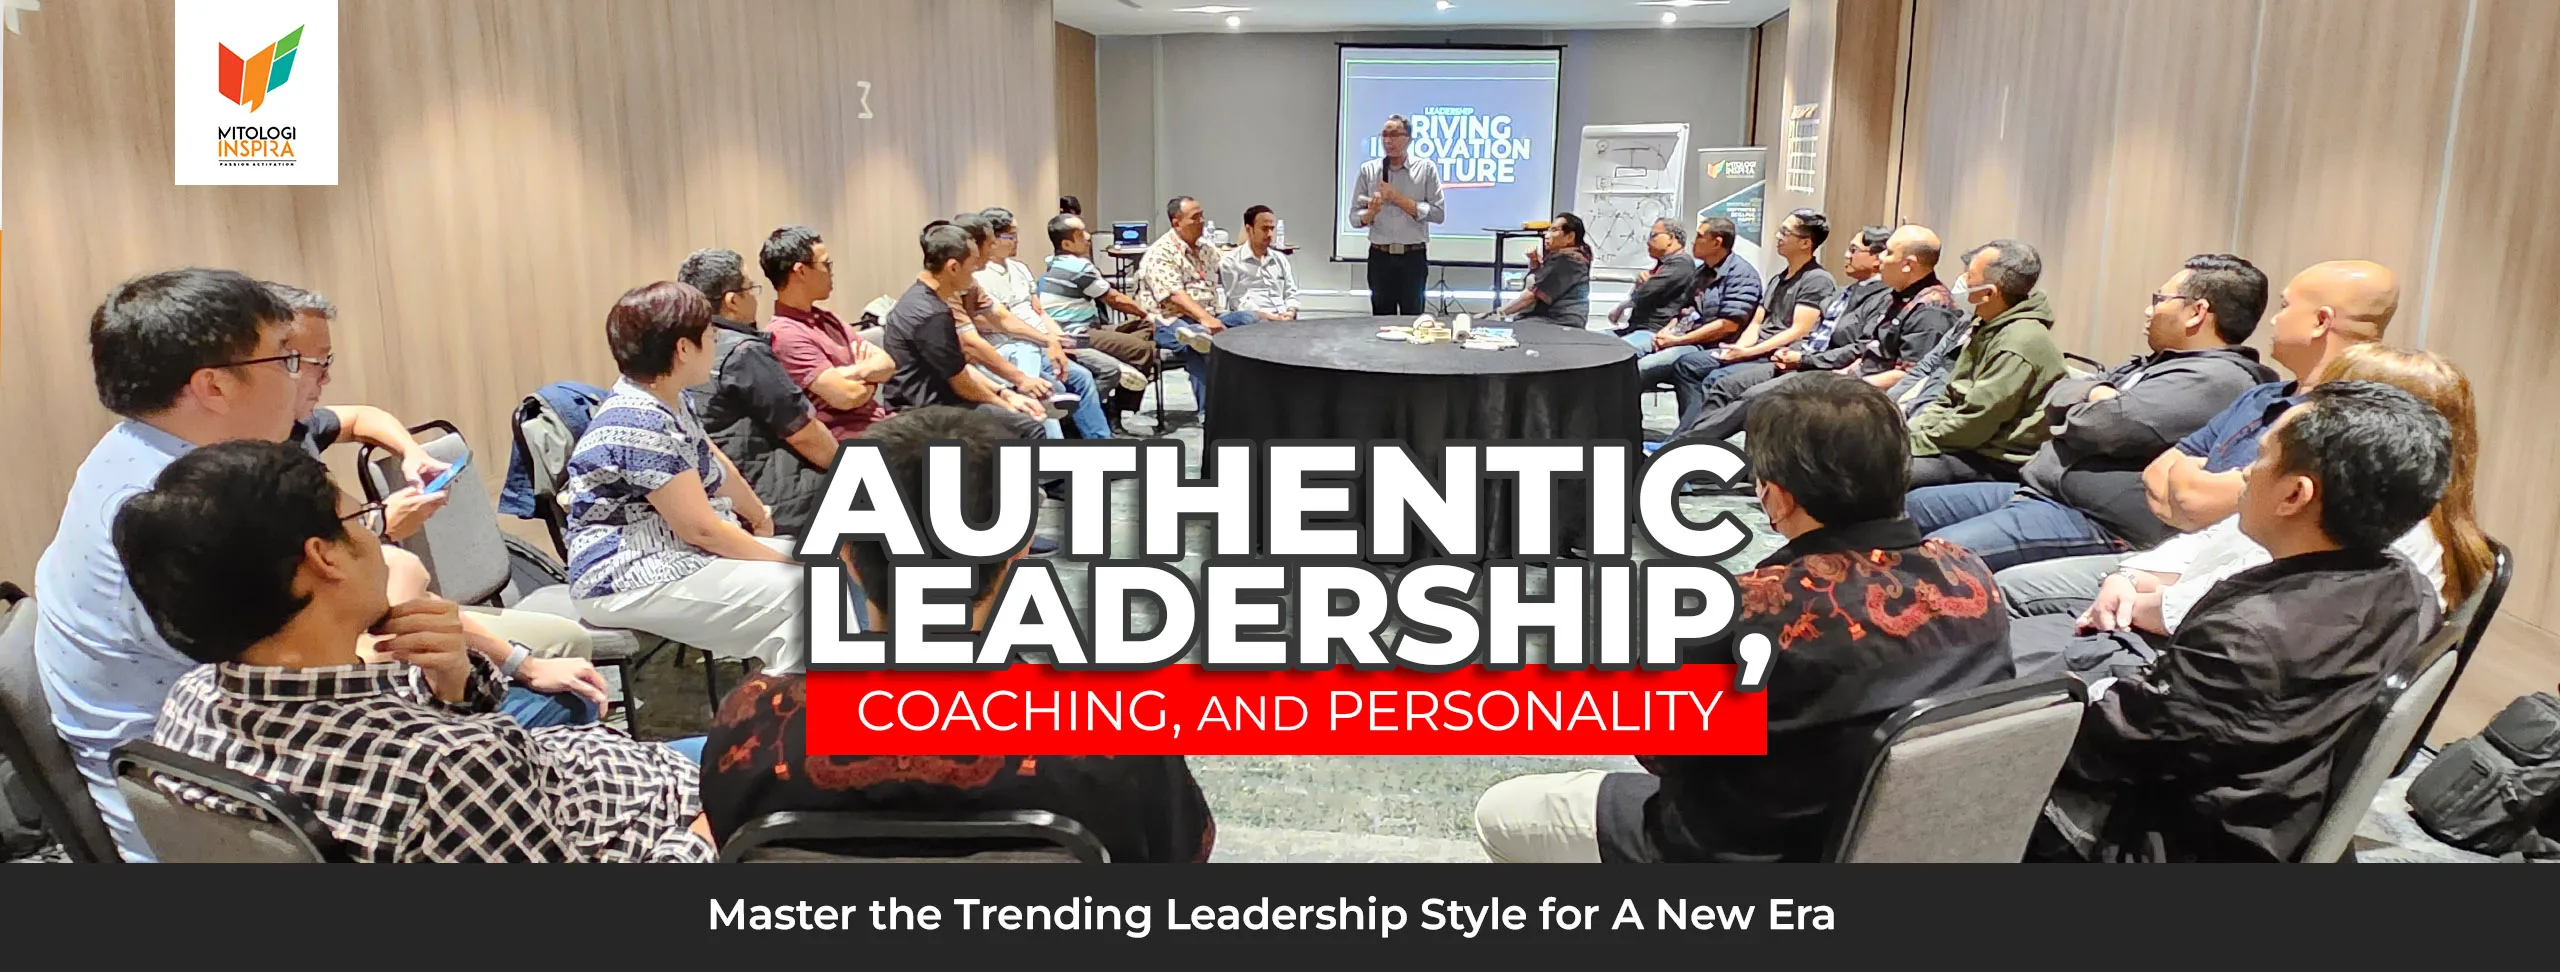 Training Authentic Leadership - Training Leadership dan pelatihan kepemimpinan, gaya leadership trending untuk era baru, gaya leadership untuk generasi baru.